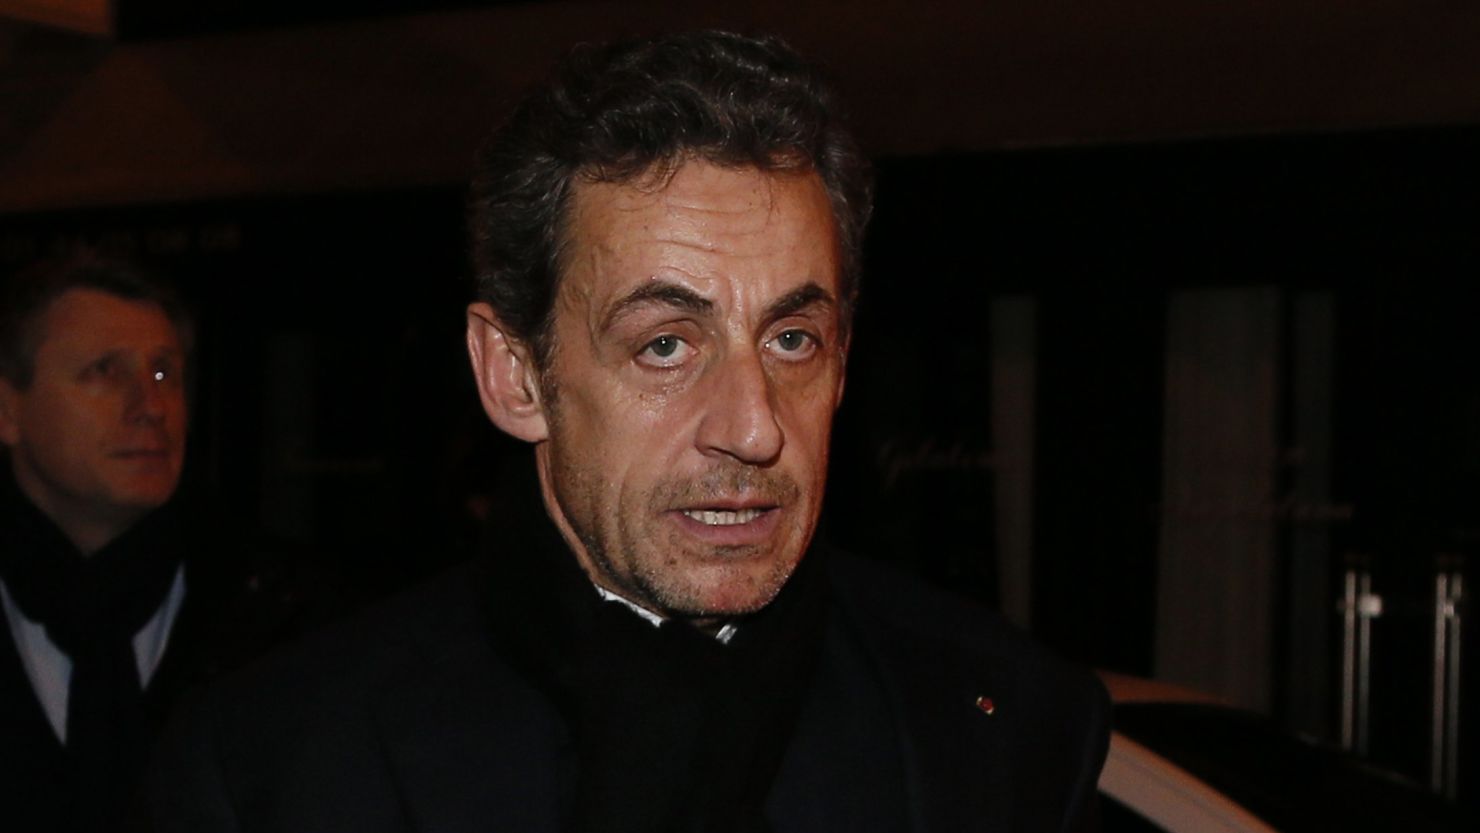 French former President Nicolas Sarkozy on January 28, 2013 in Paris.